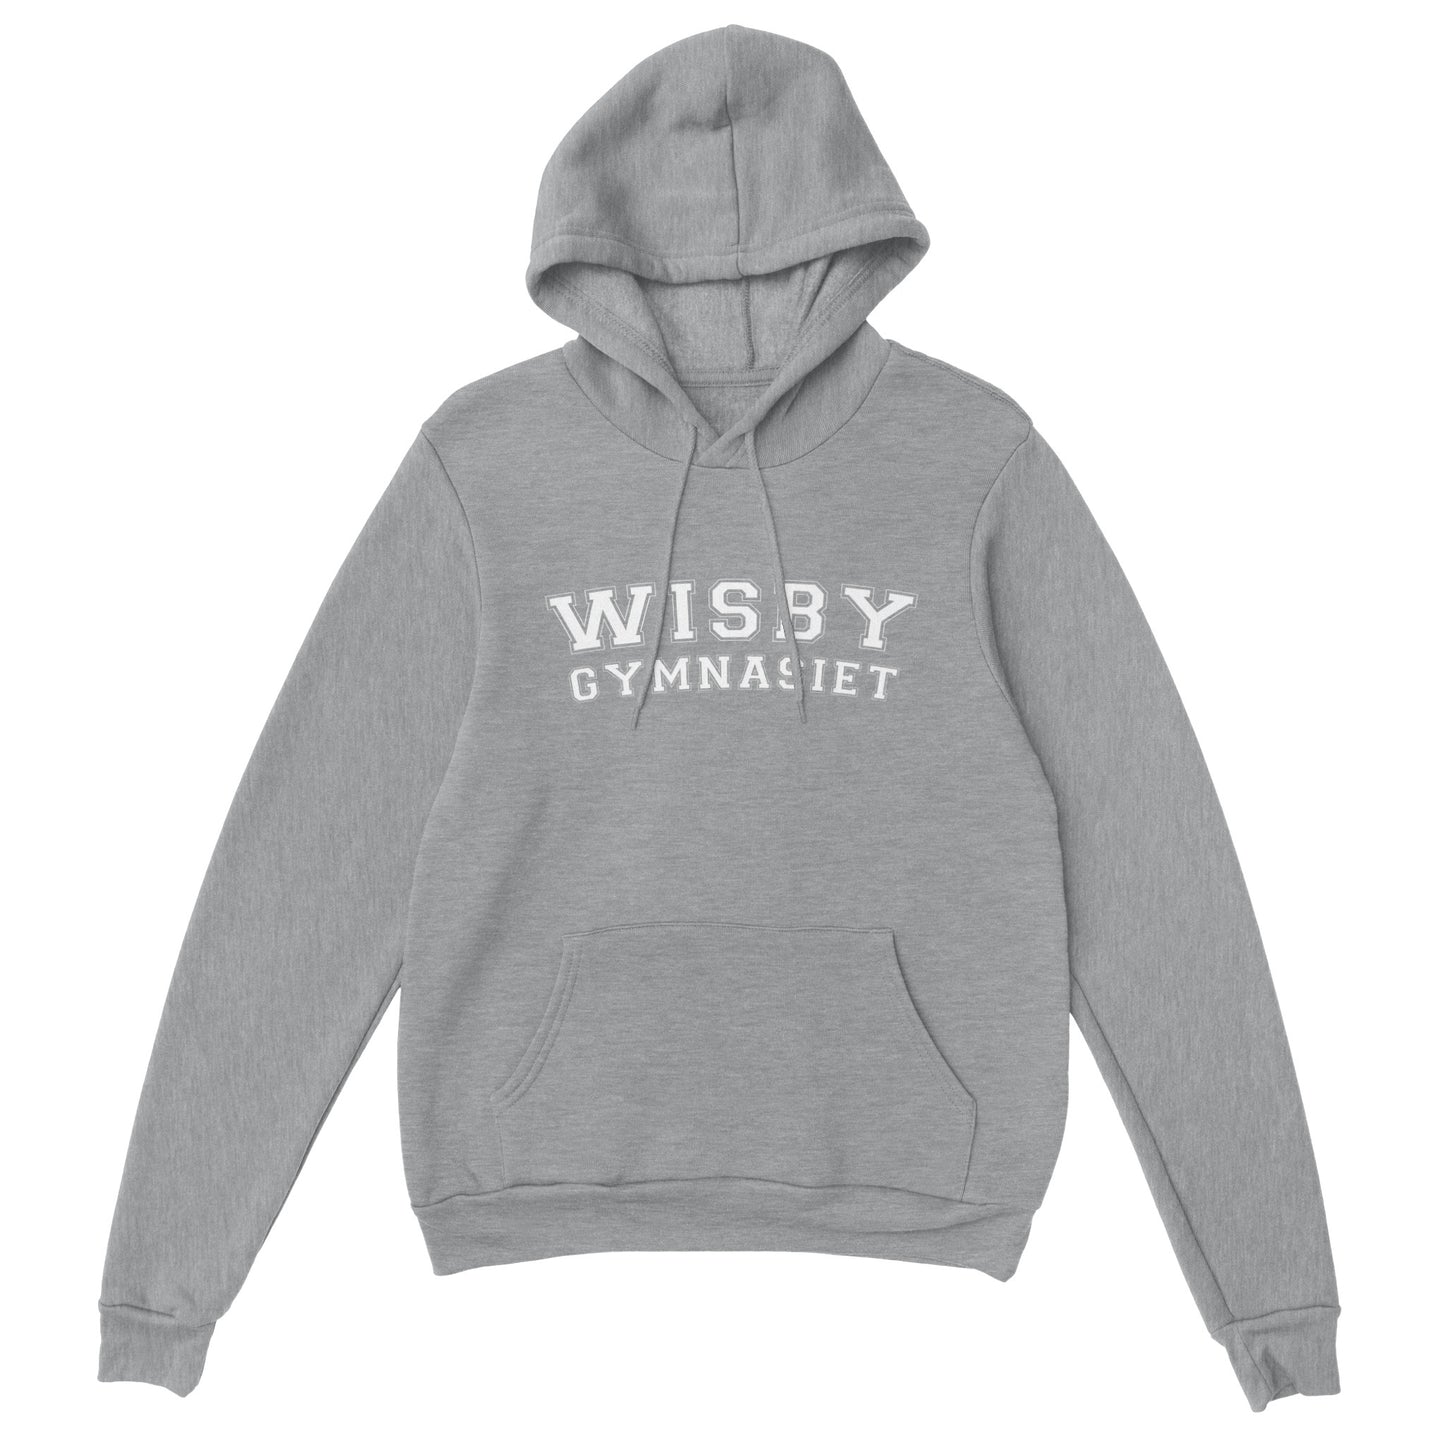 WISBY GYMNASIET - Unisex hoodie - 5 färger